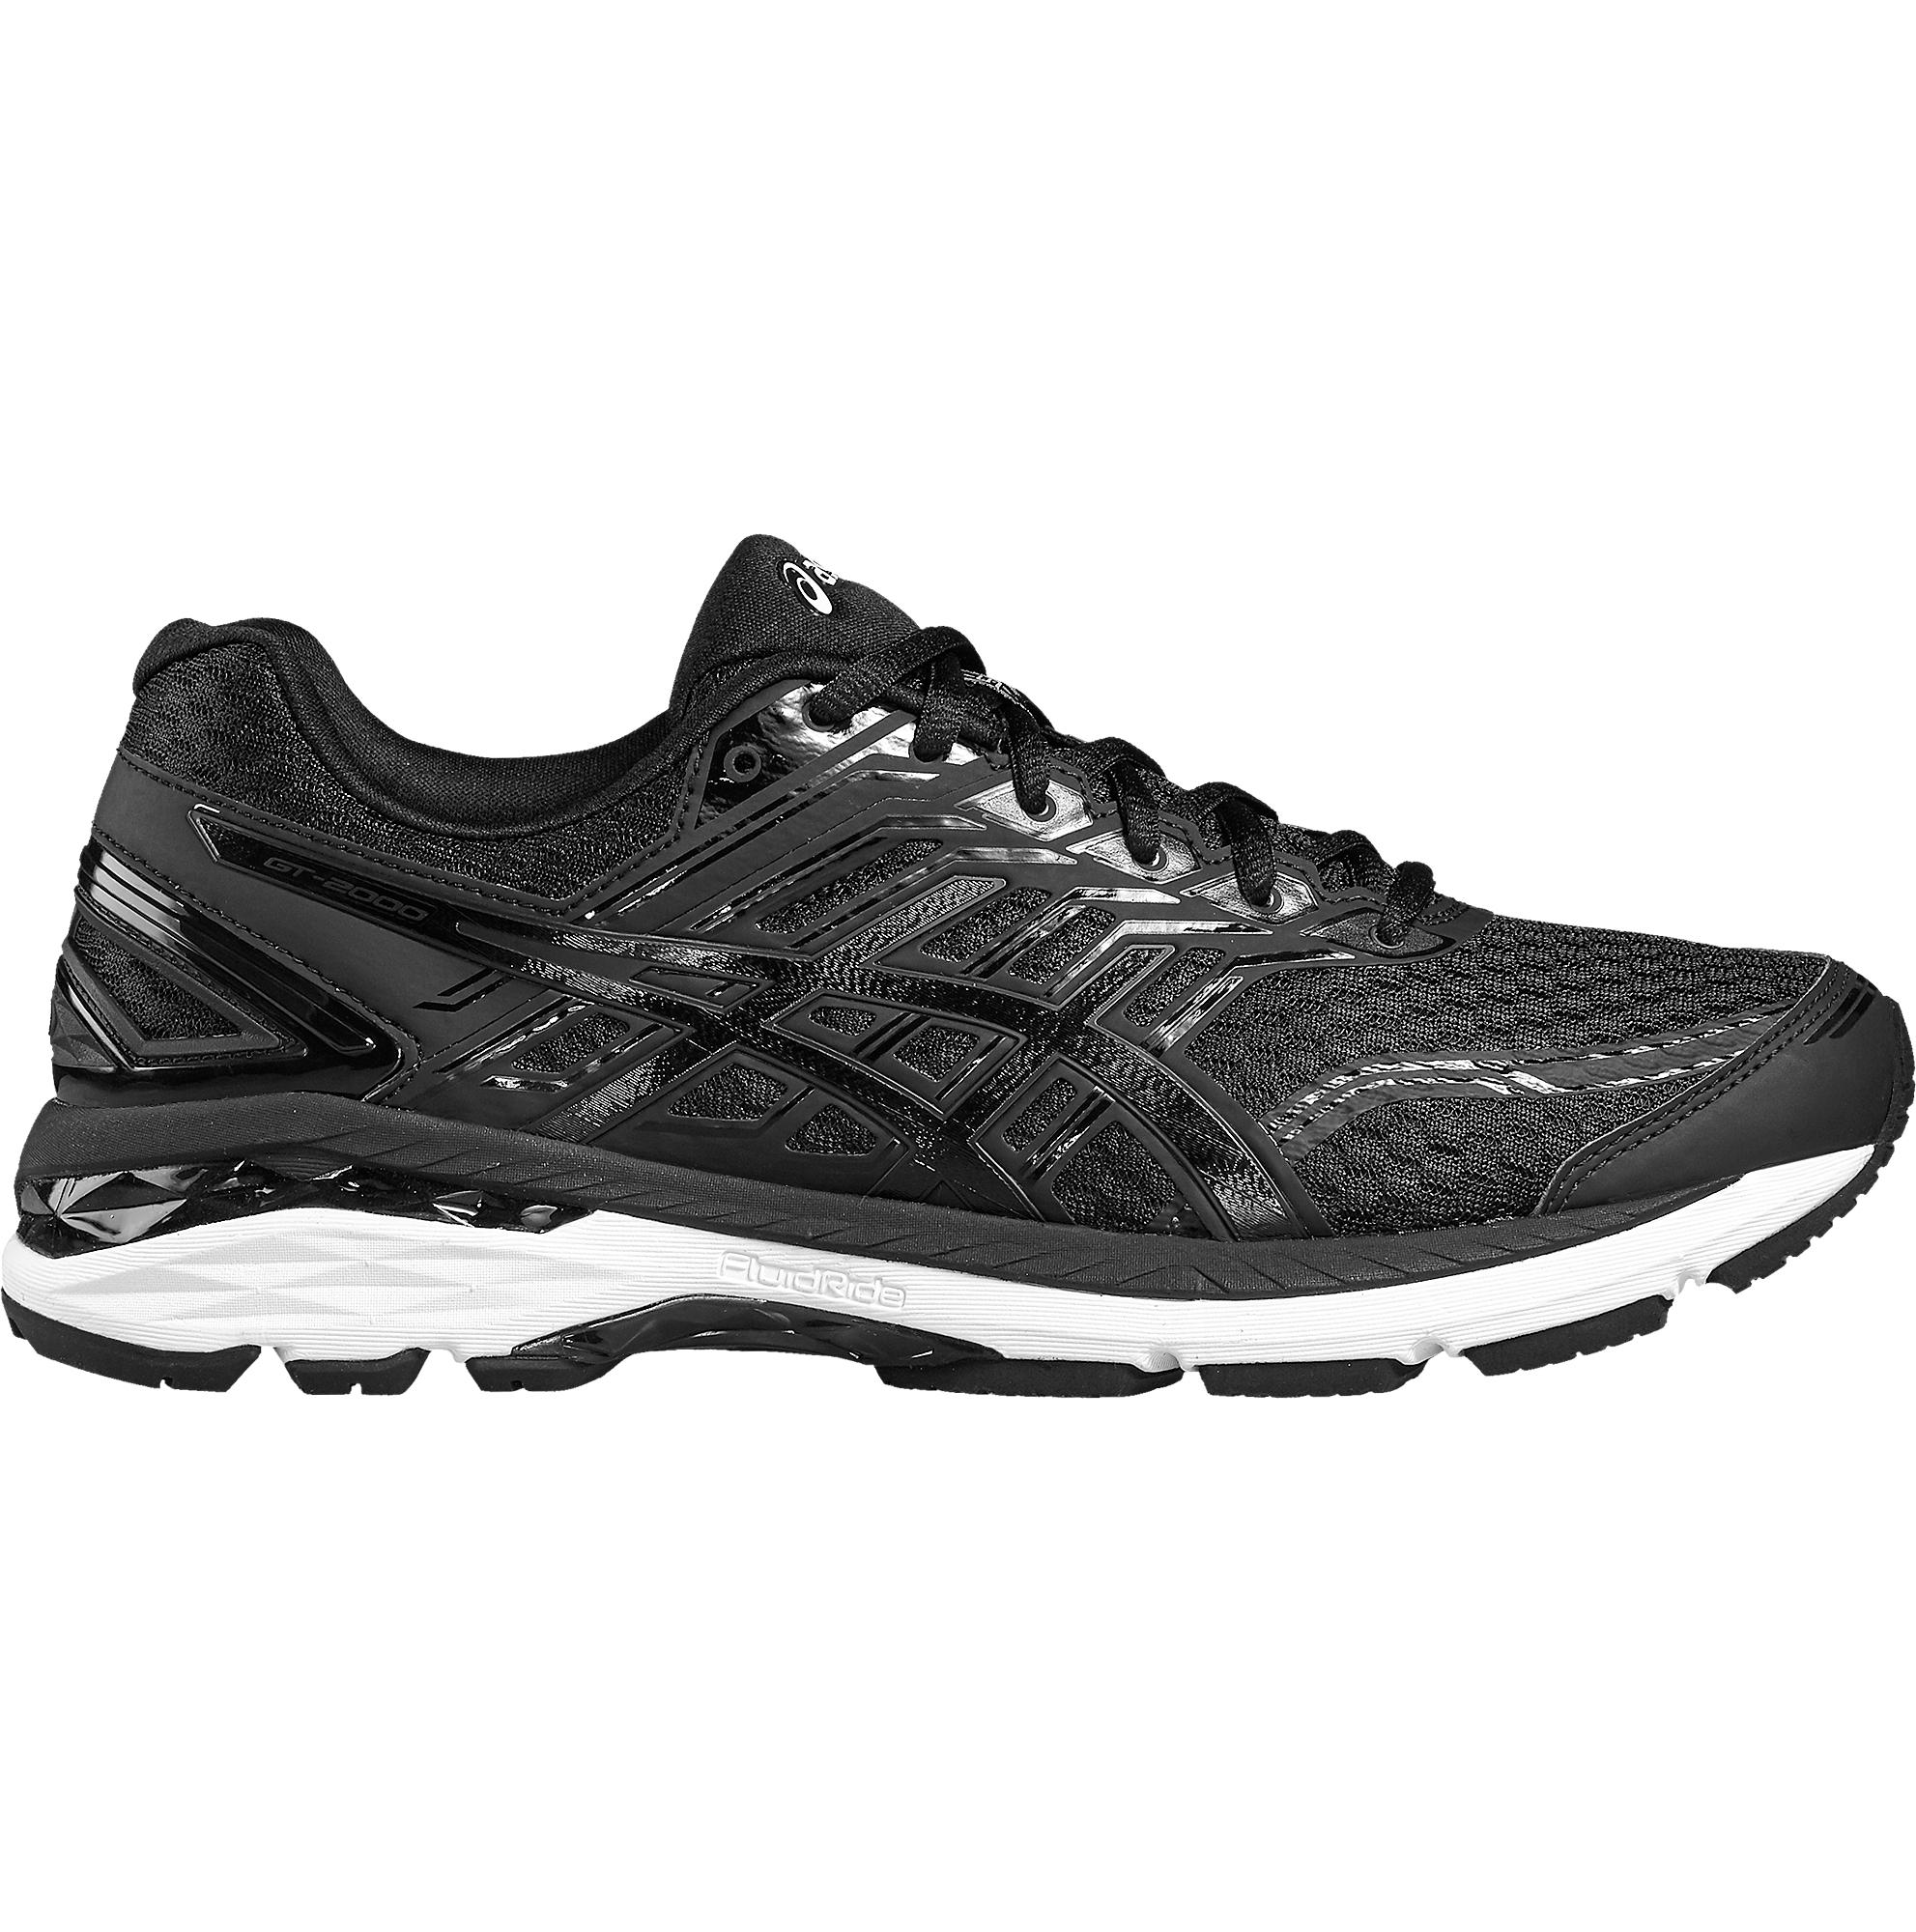 Asics Mens GT-2000 5 Running Shoes - Black/Onyx/White - Tennisnuts.com